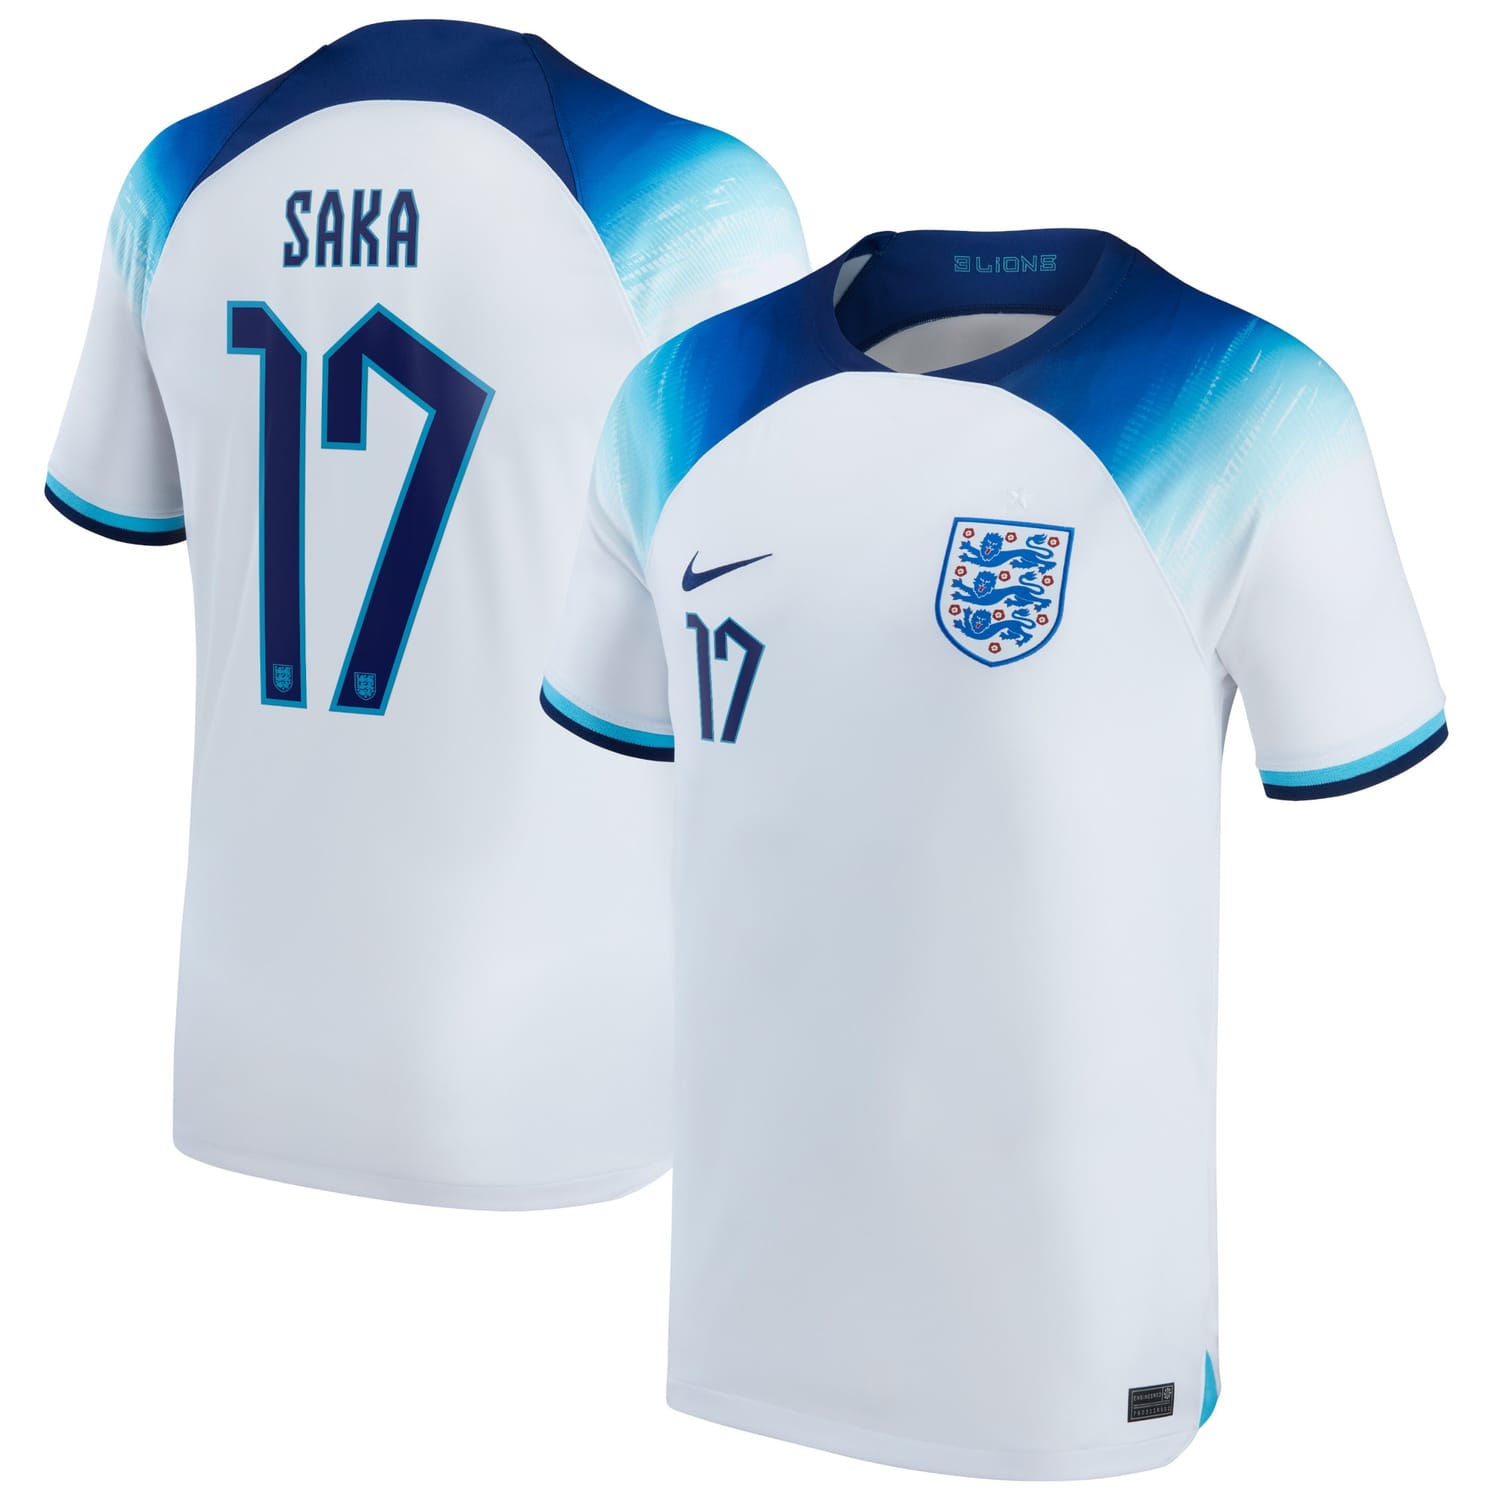 England National Team Home Jersey Shirt 2022 player Bukayo Saka 17 printing for Men